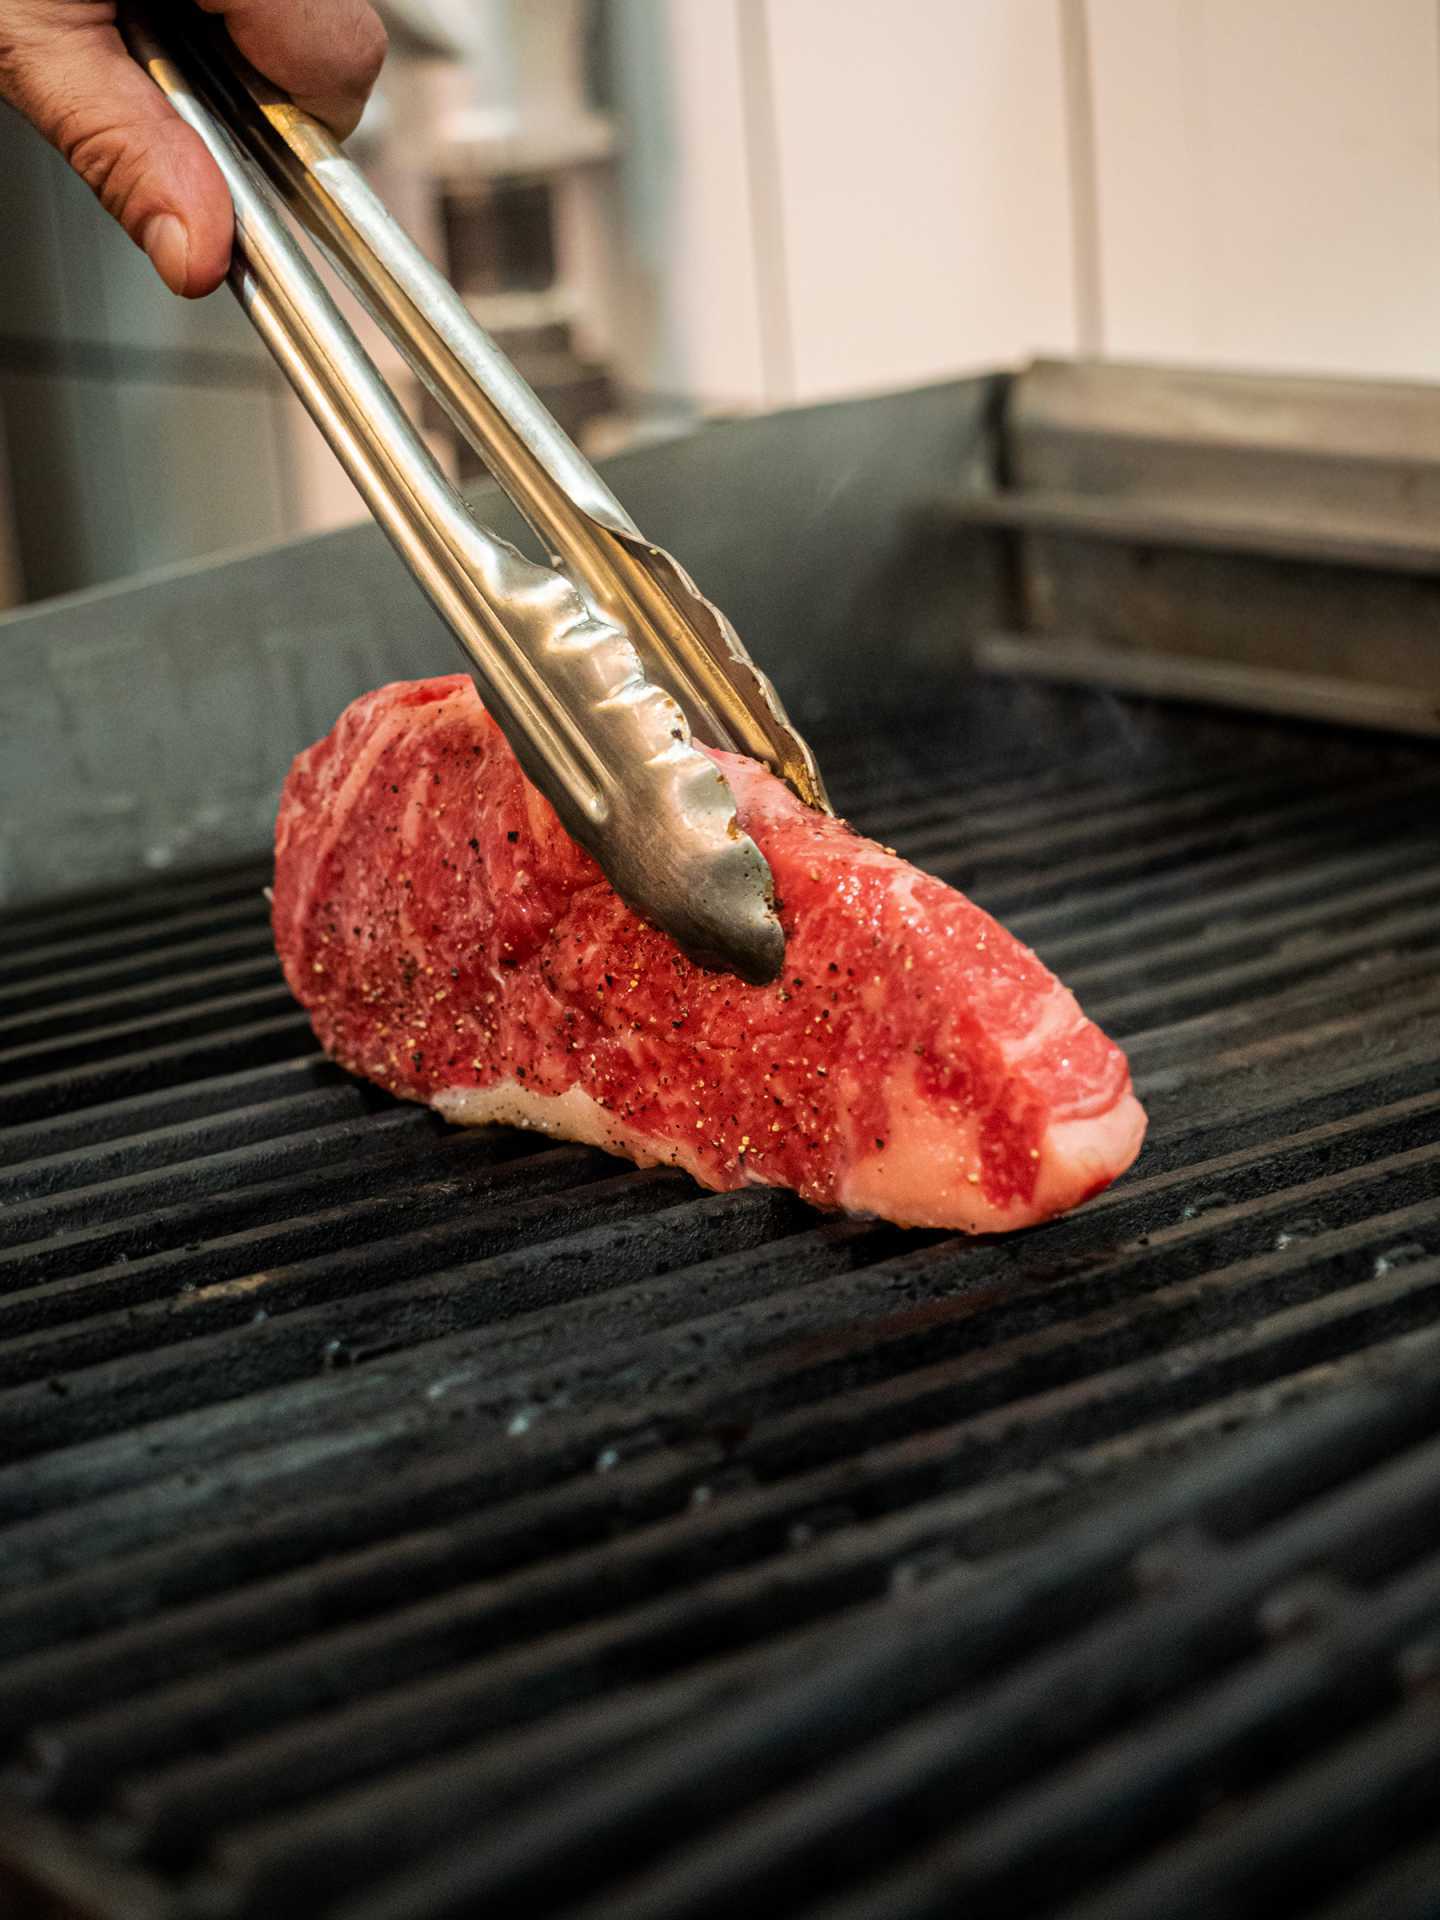 Best new Toronto restaurants | Raw steak on the grill at J's Steak Frites